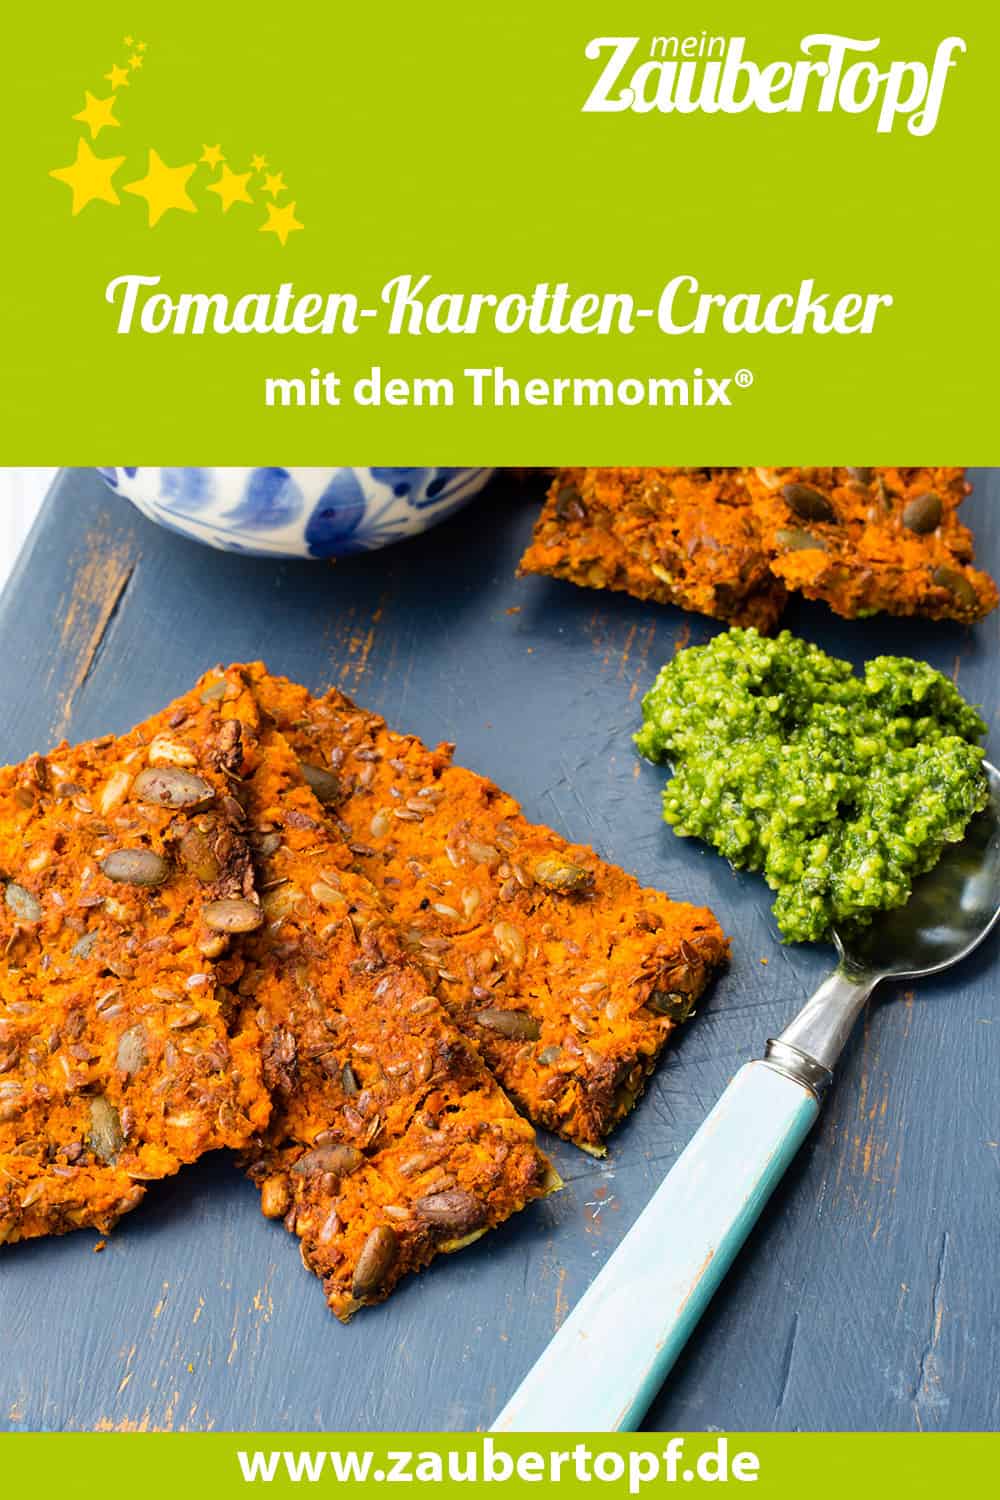 Thomaten-Karotten-Cracker mit dem Thermomix® – Foto: Sophia Handschuh